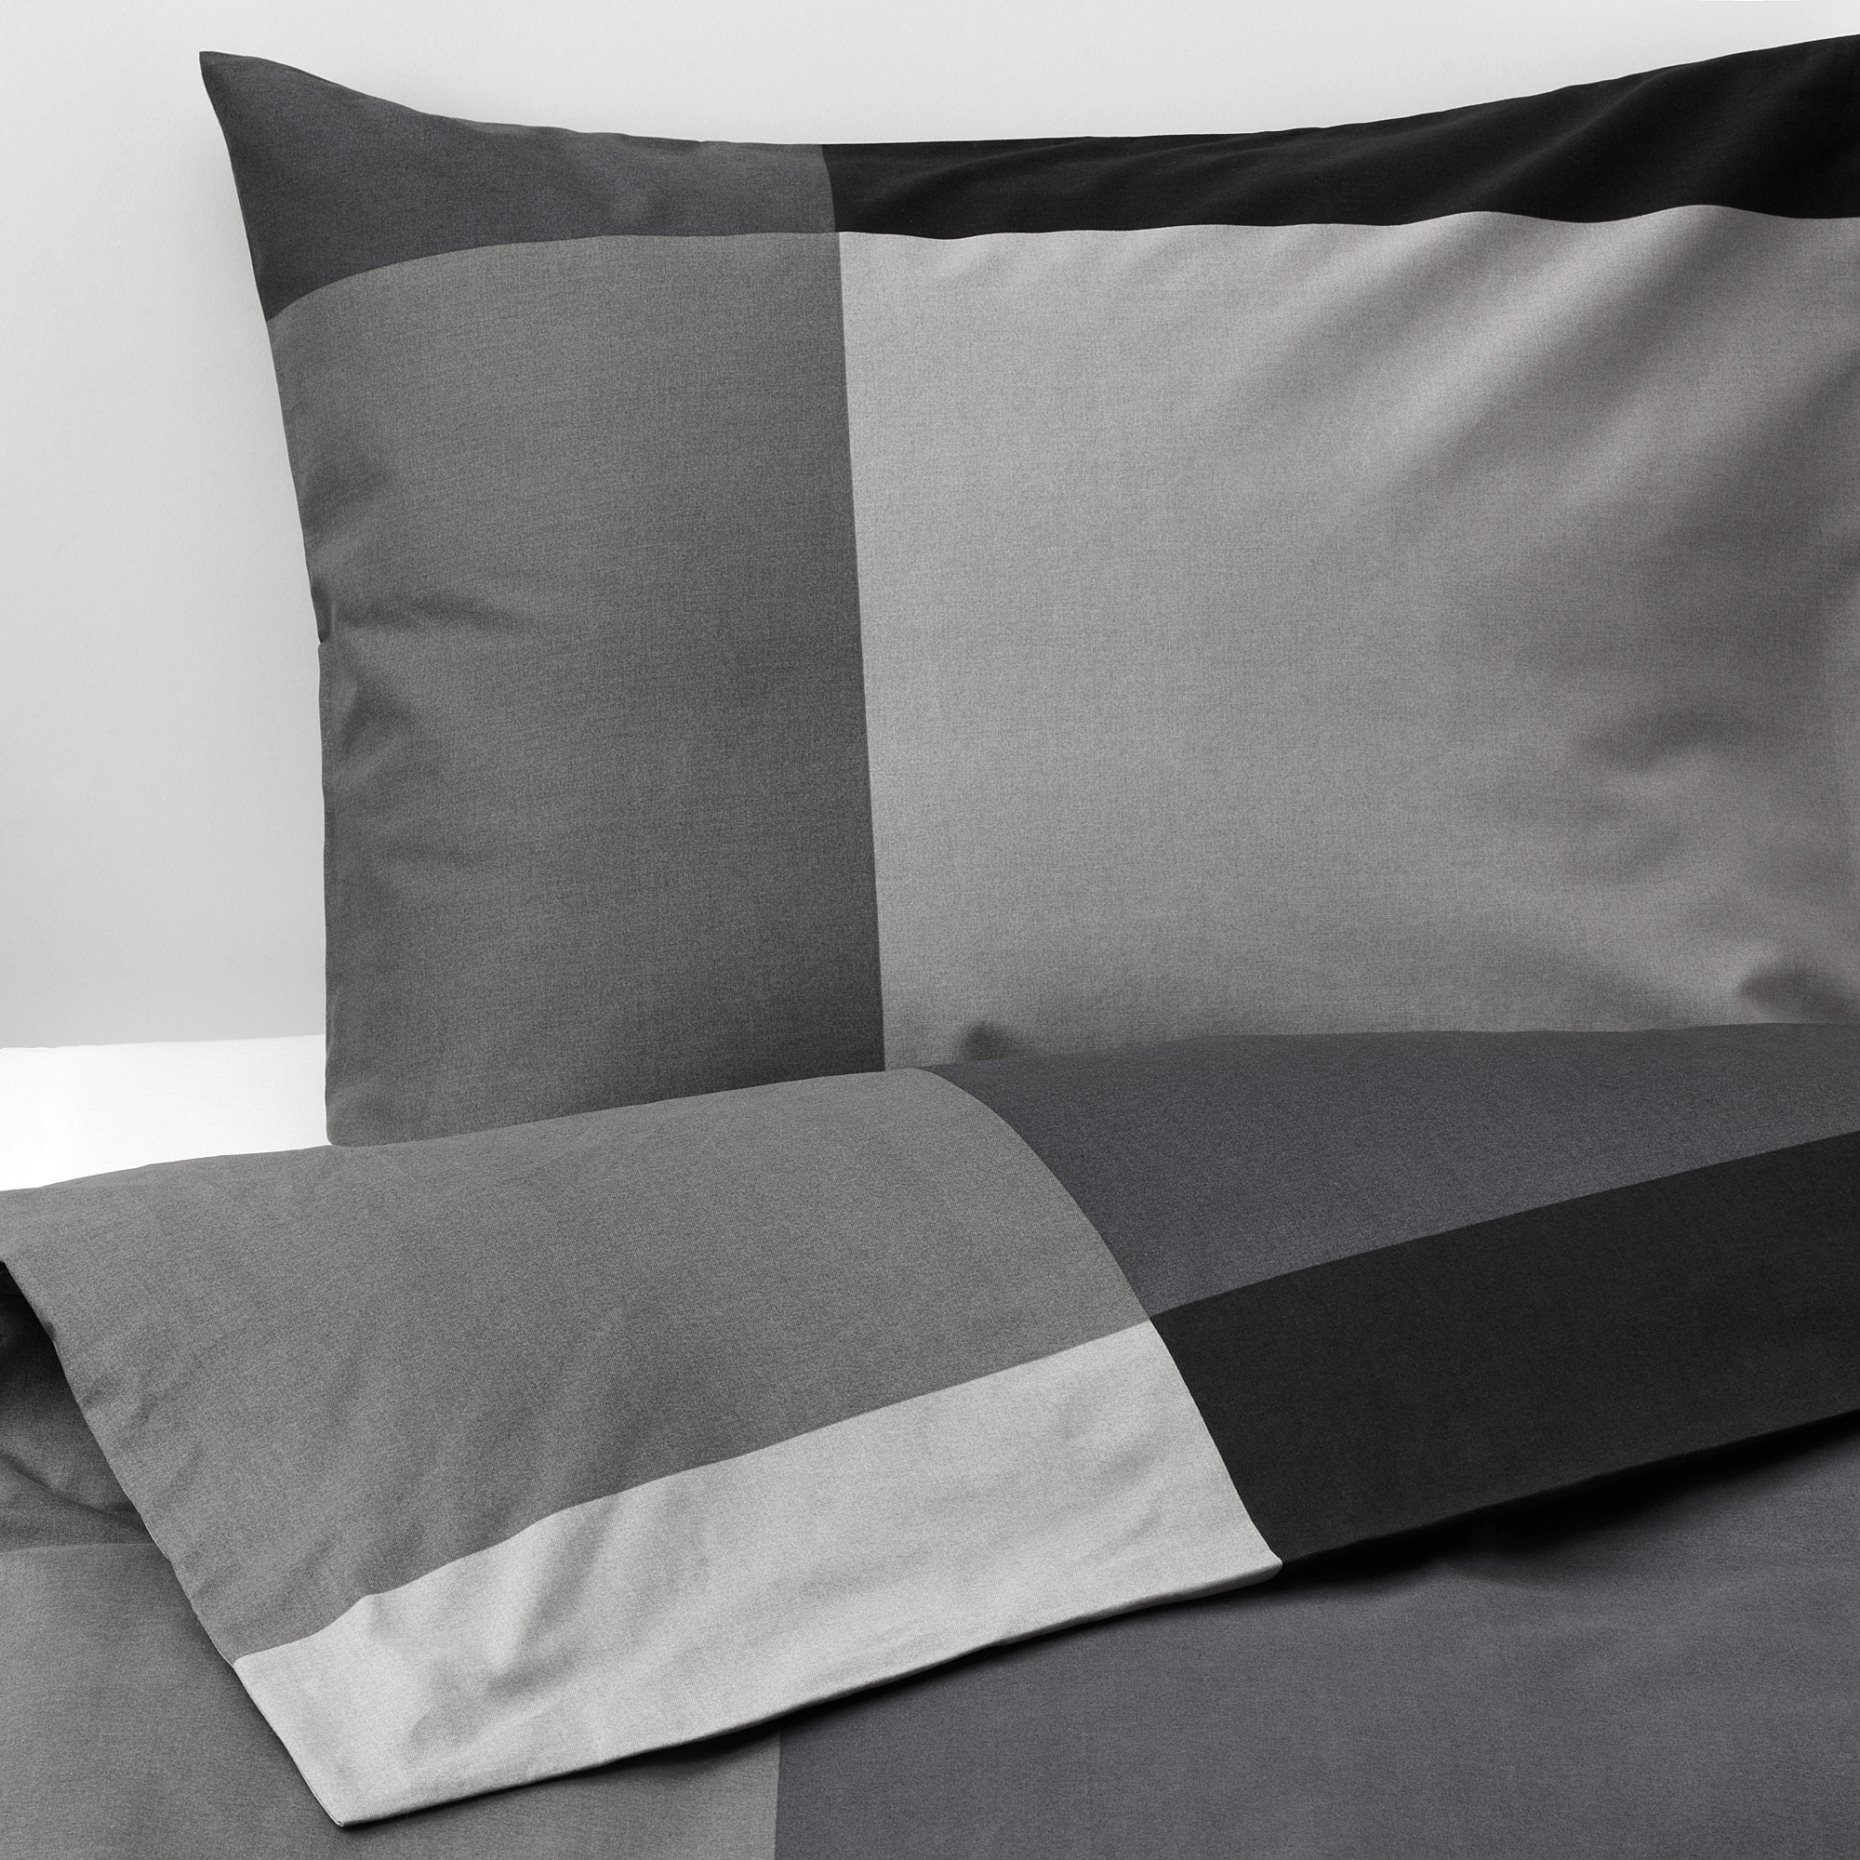 BRUNKRISSLA, duvet cover and pillowcase, 150x200/50x60 cm, 305.645.83